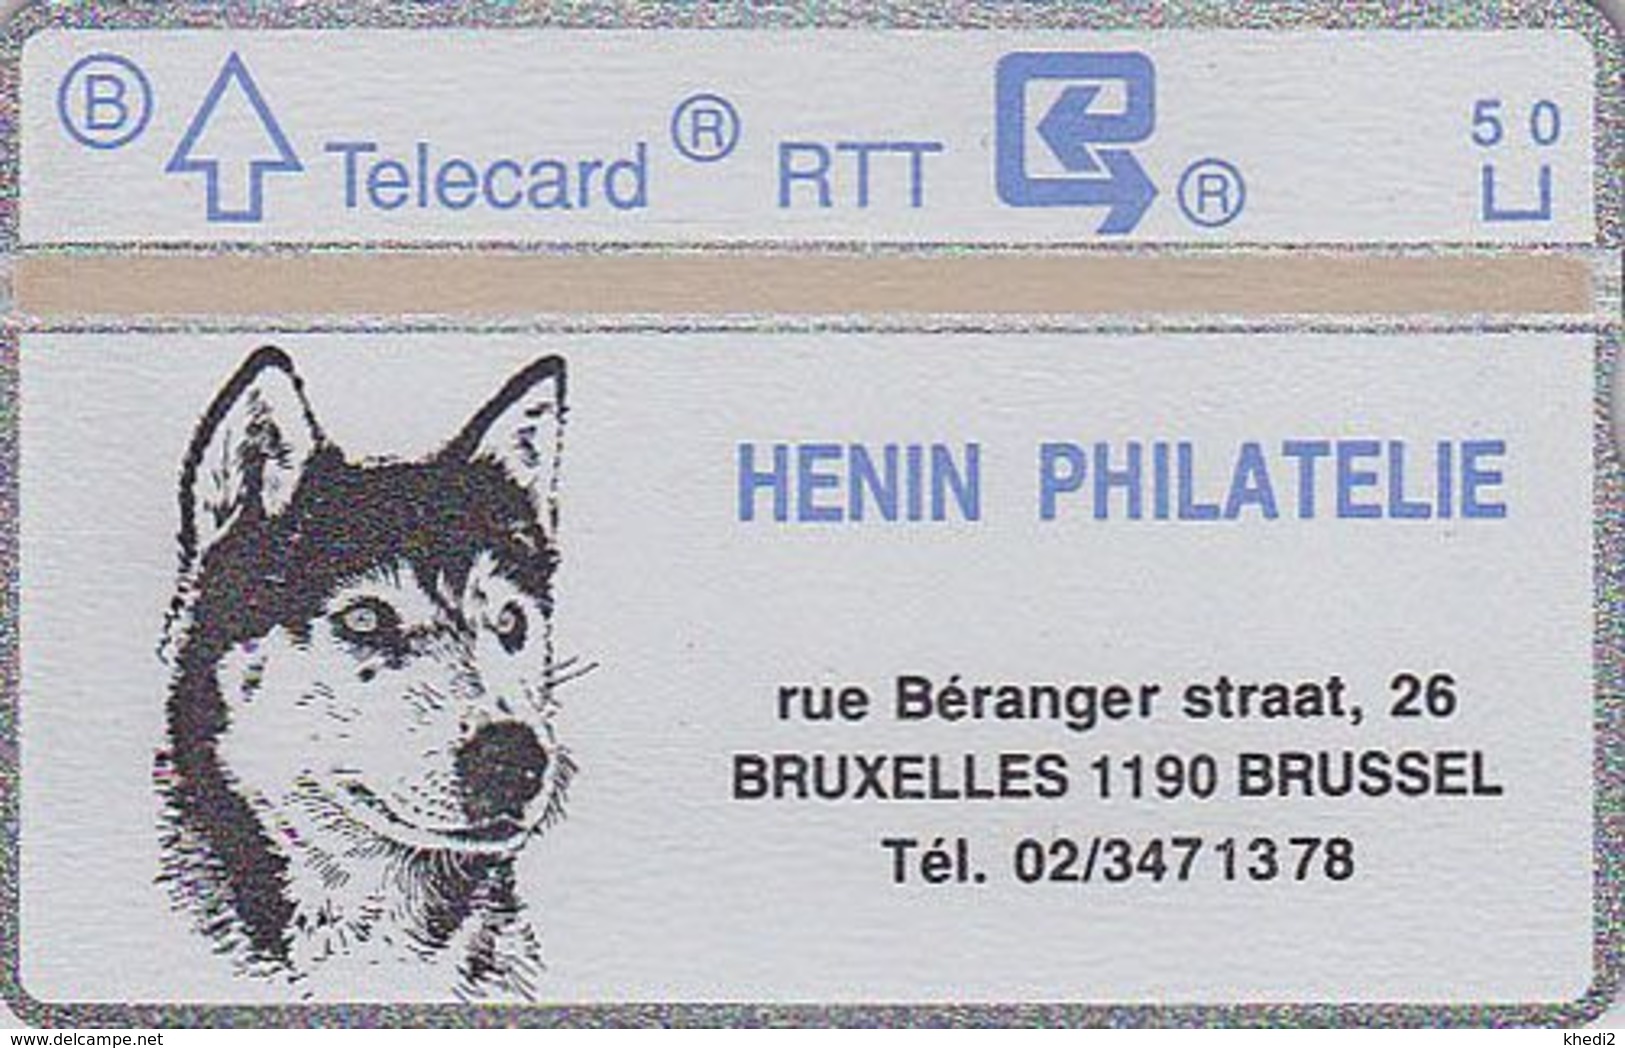 Télécarte Privée De Belgique LG L&G NEUVE - ANIMAL - CHIEN HUSKY  - DOG MINT Phonecard - HUND Telefonkarte - 588 - Sin Chip